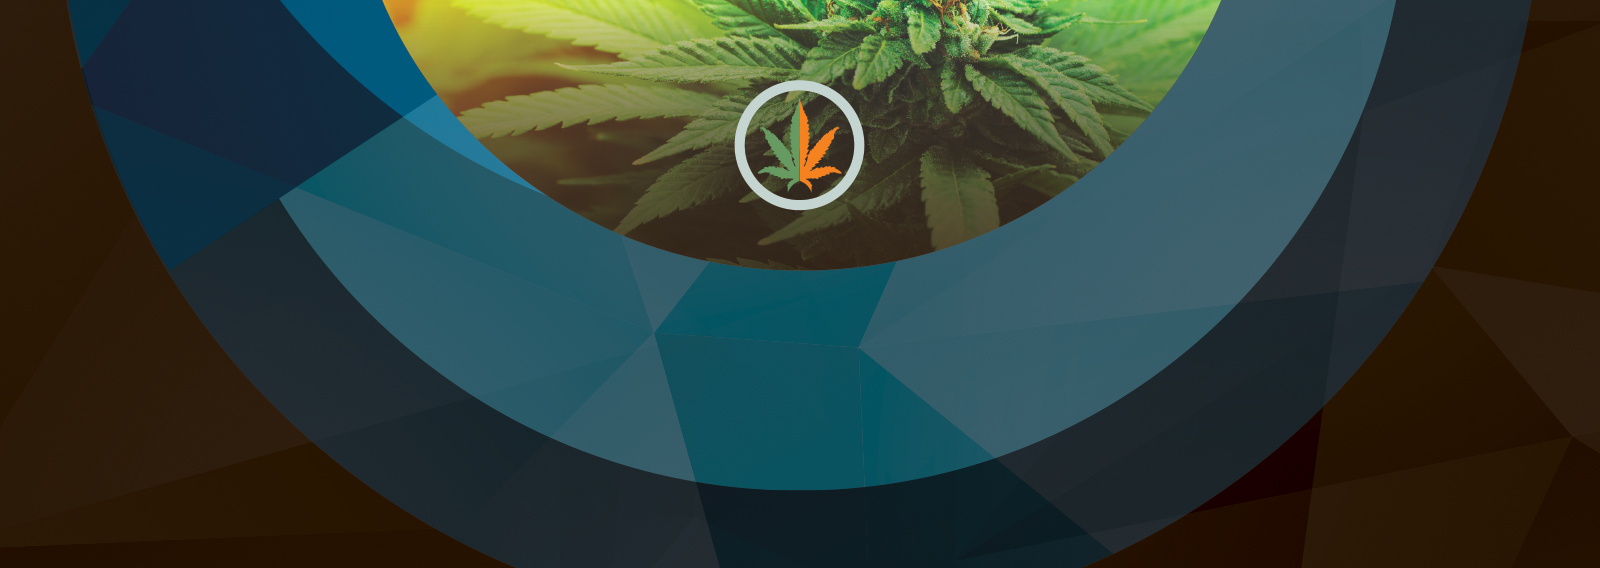 cannabis leaf inside a blue circle